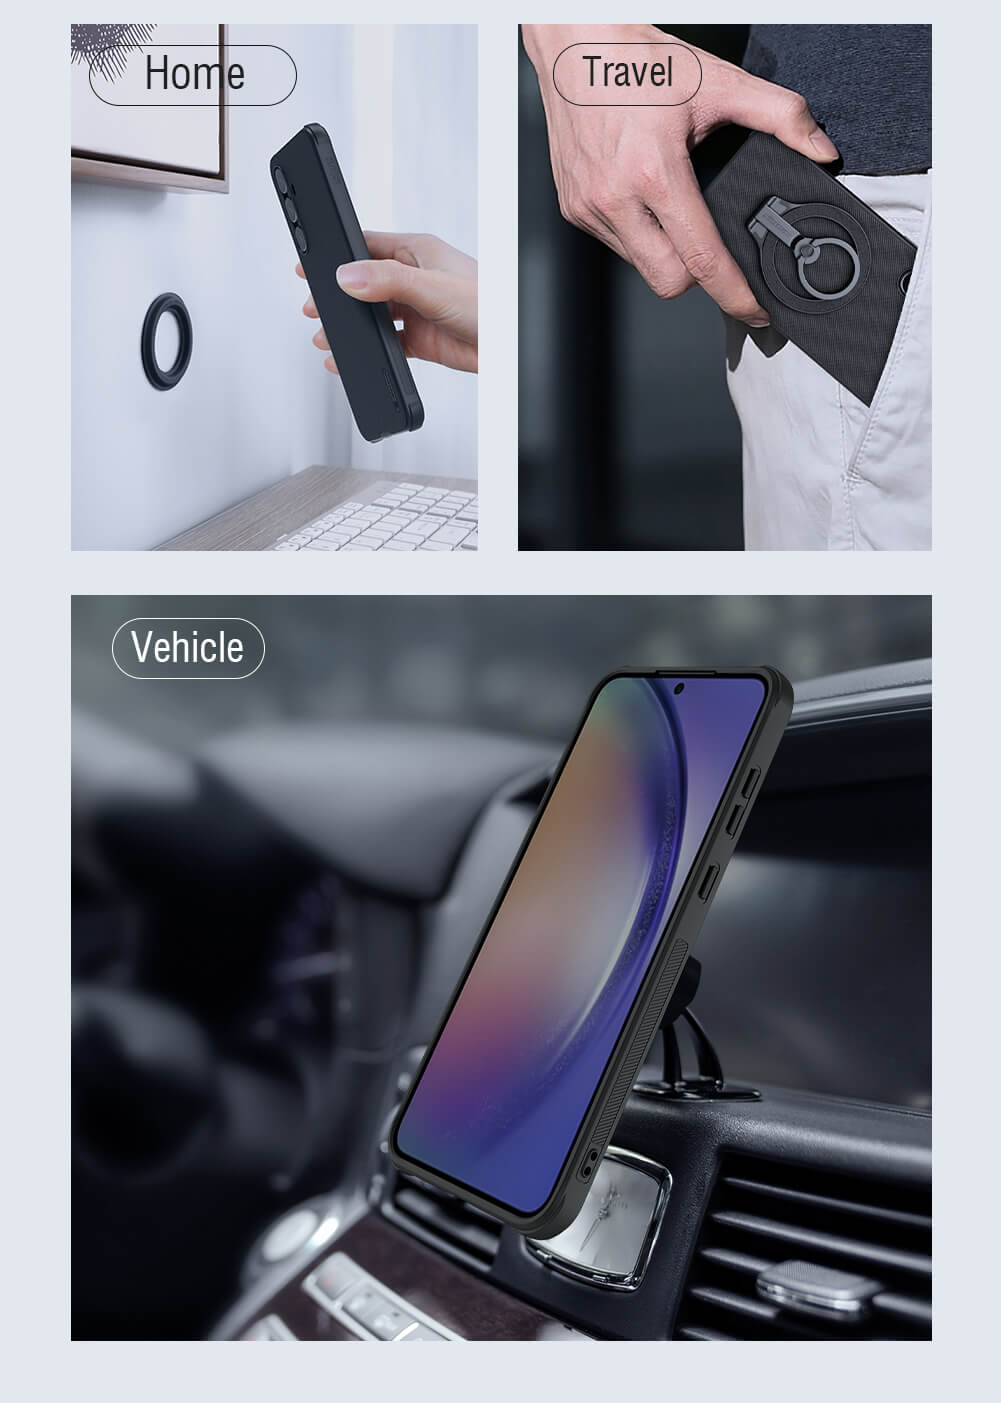 Чехол-крышка NILLKIN для Samsung Galaxy A55 (серия Frosted shield Pro Magnetic case)